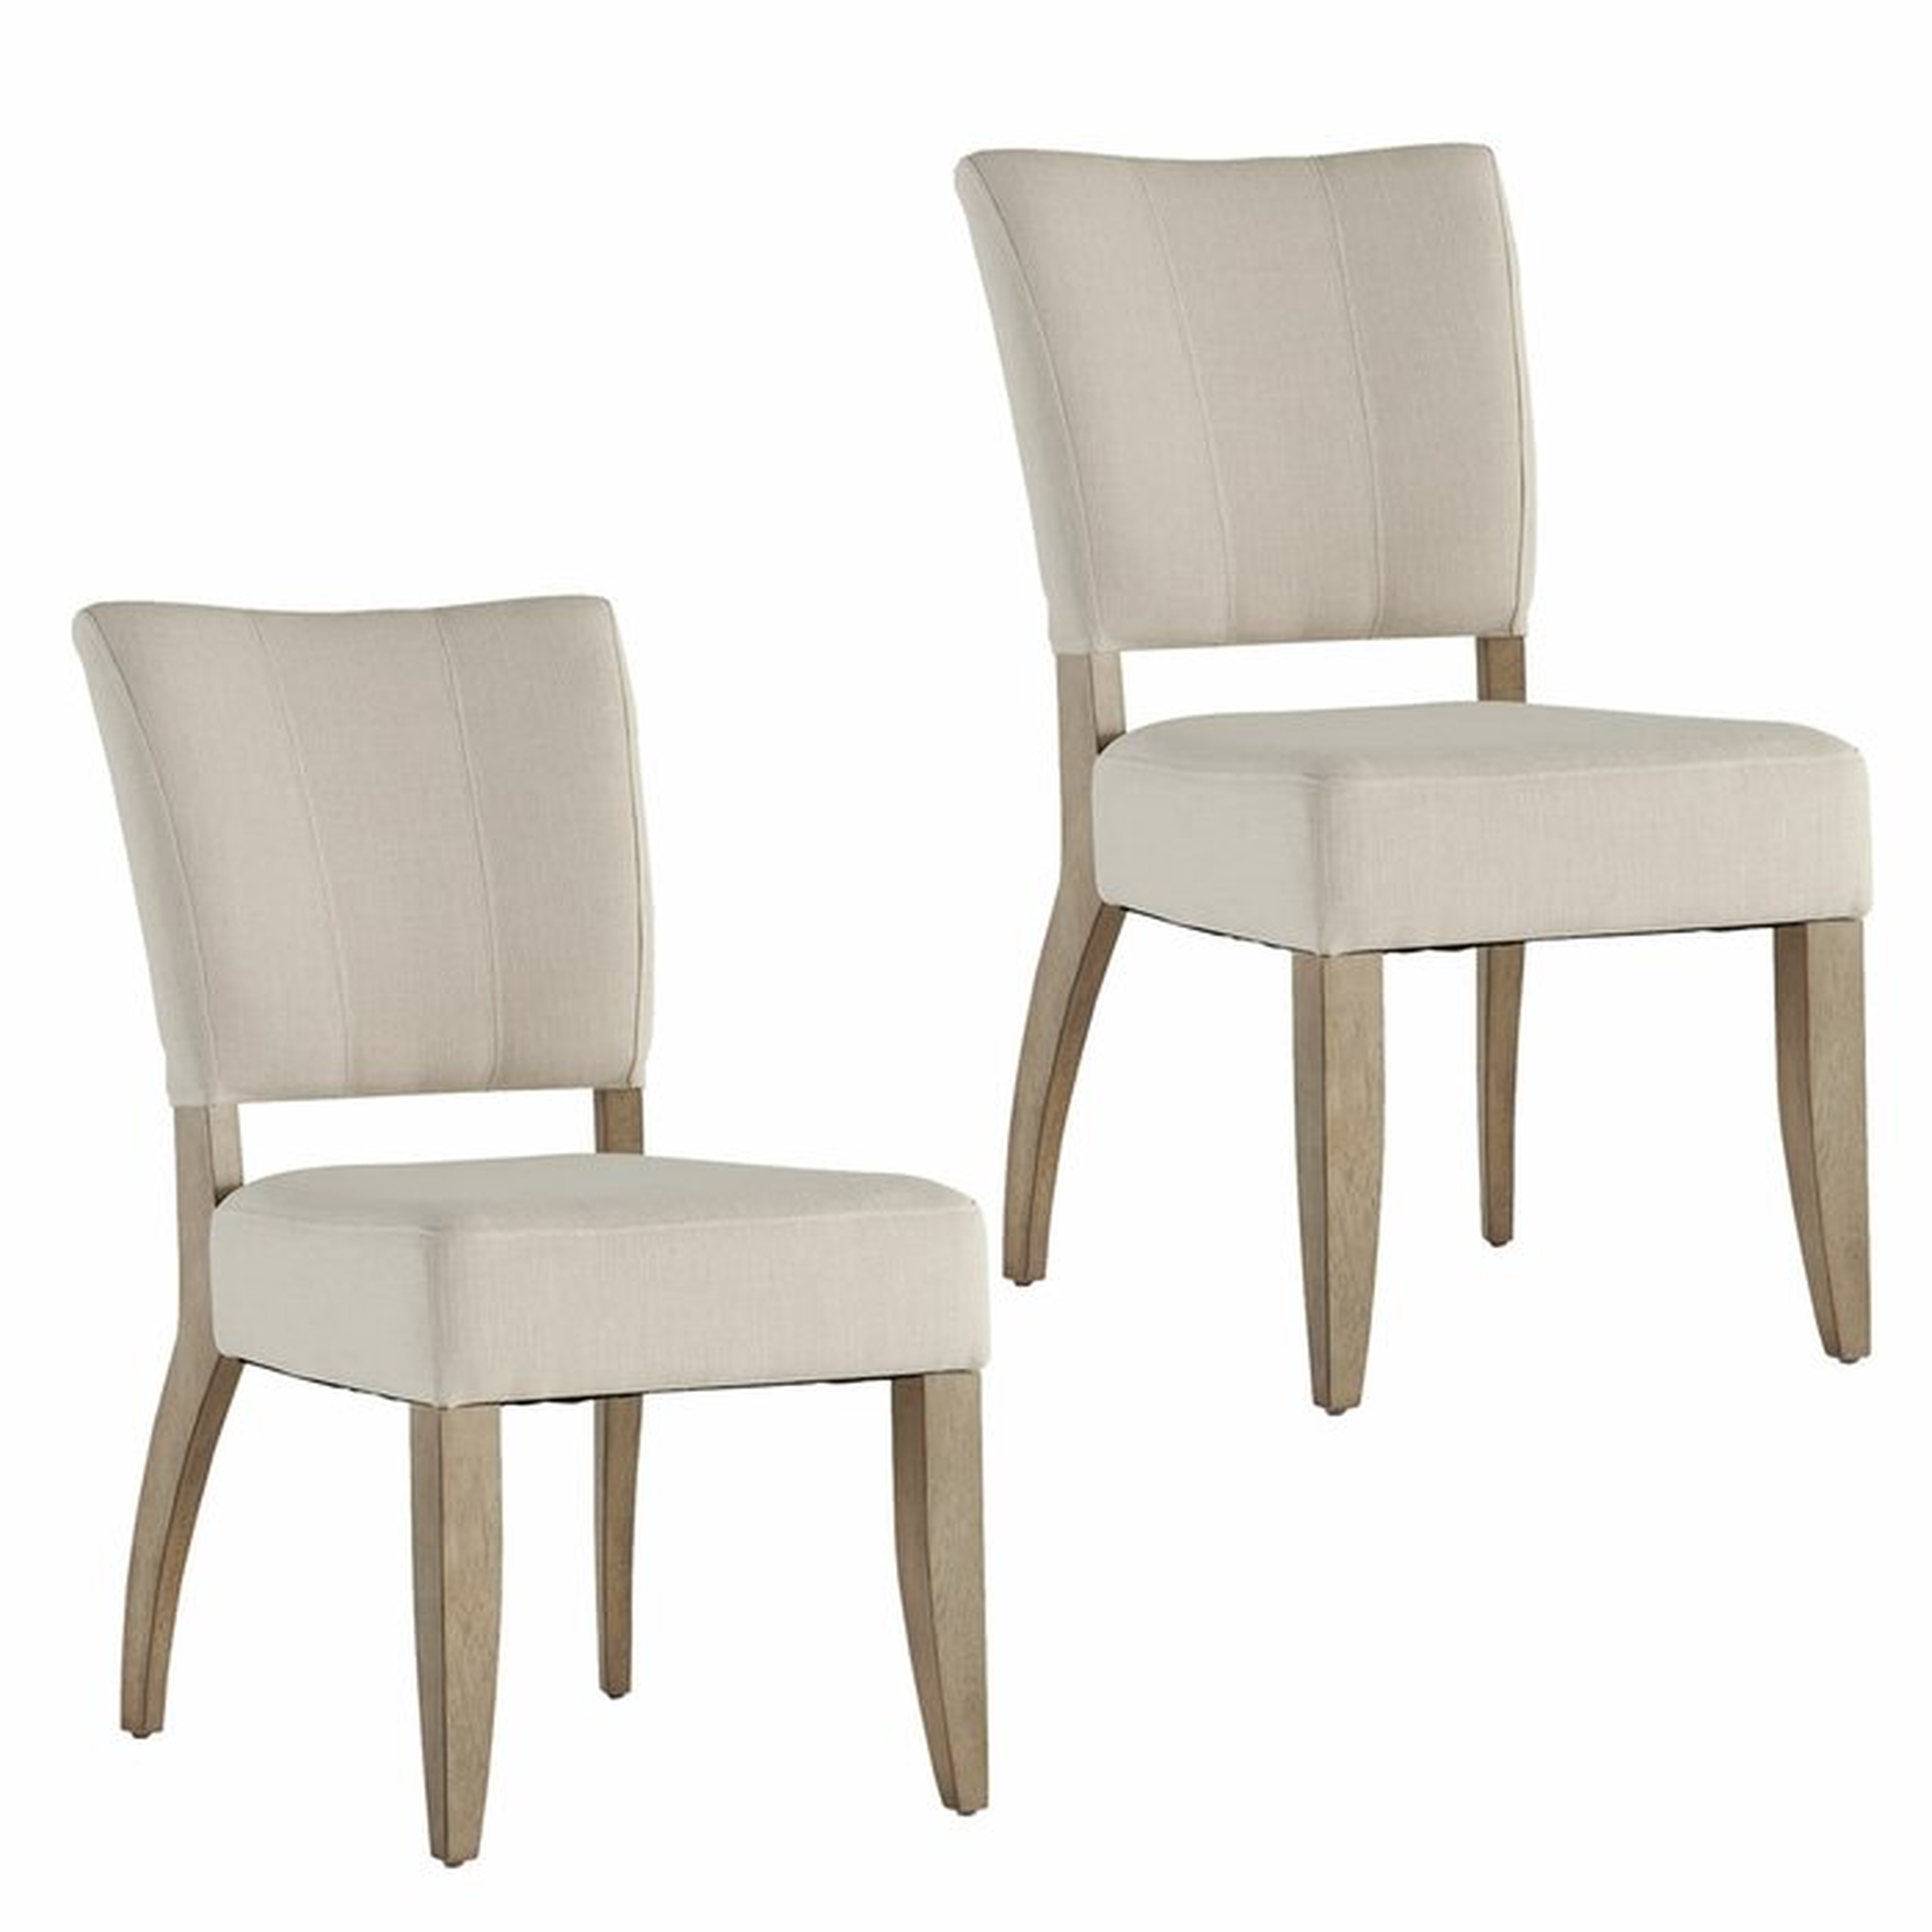 Willsey Upholstered Side Chair, Set of 2 - Wayfair